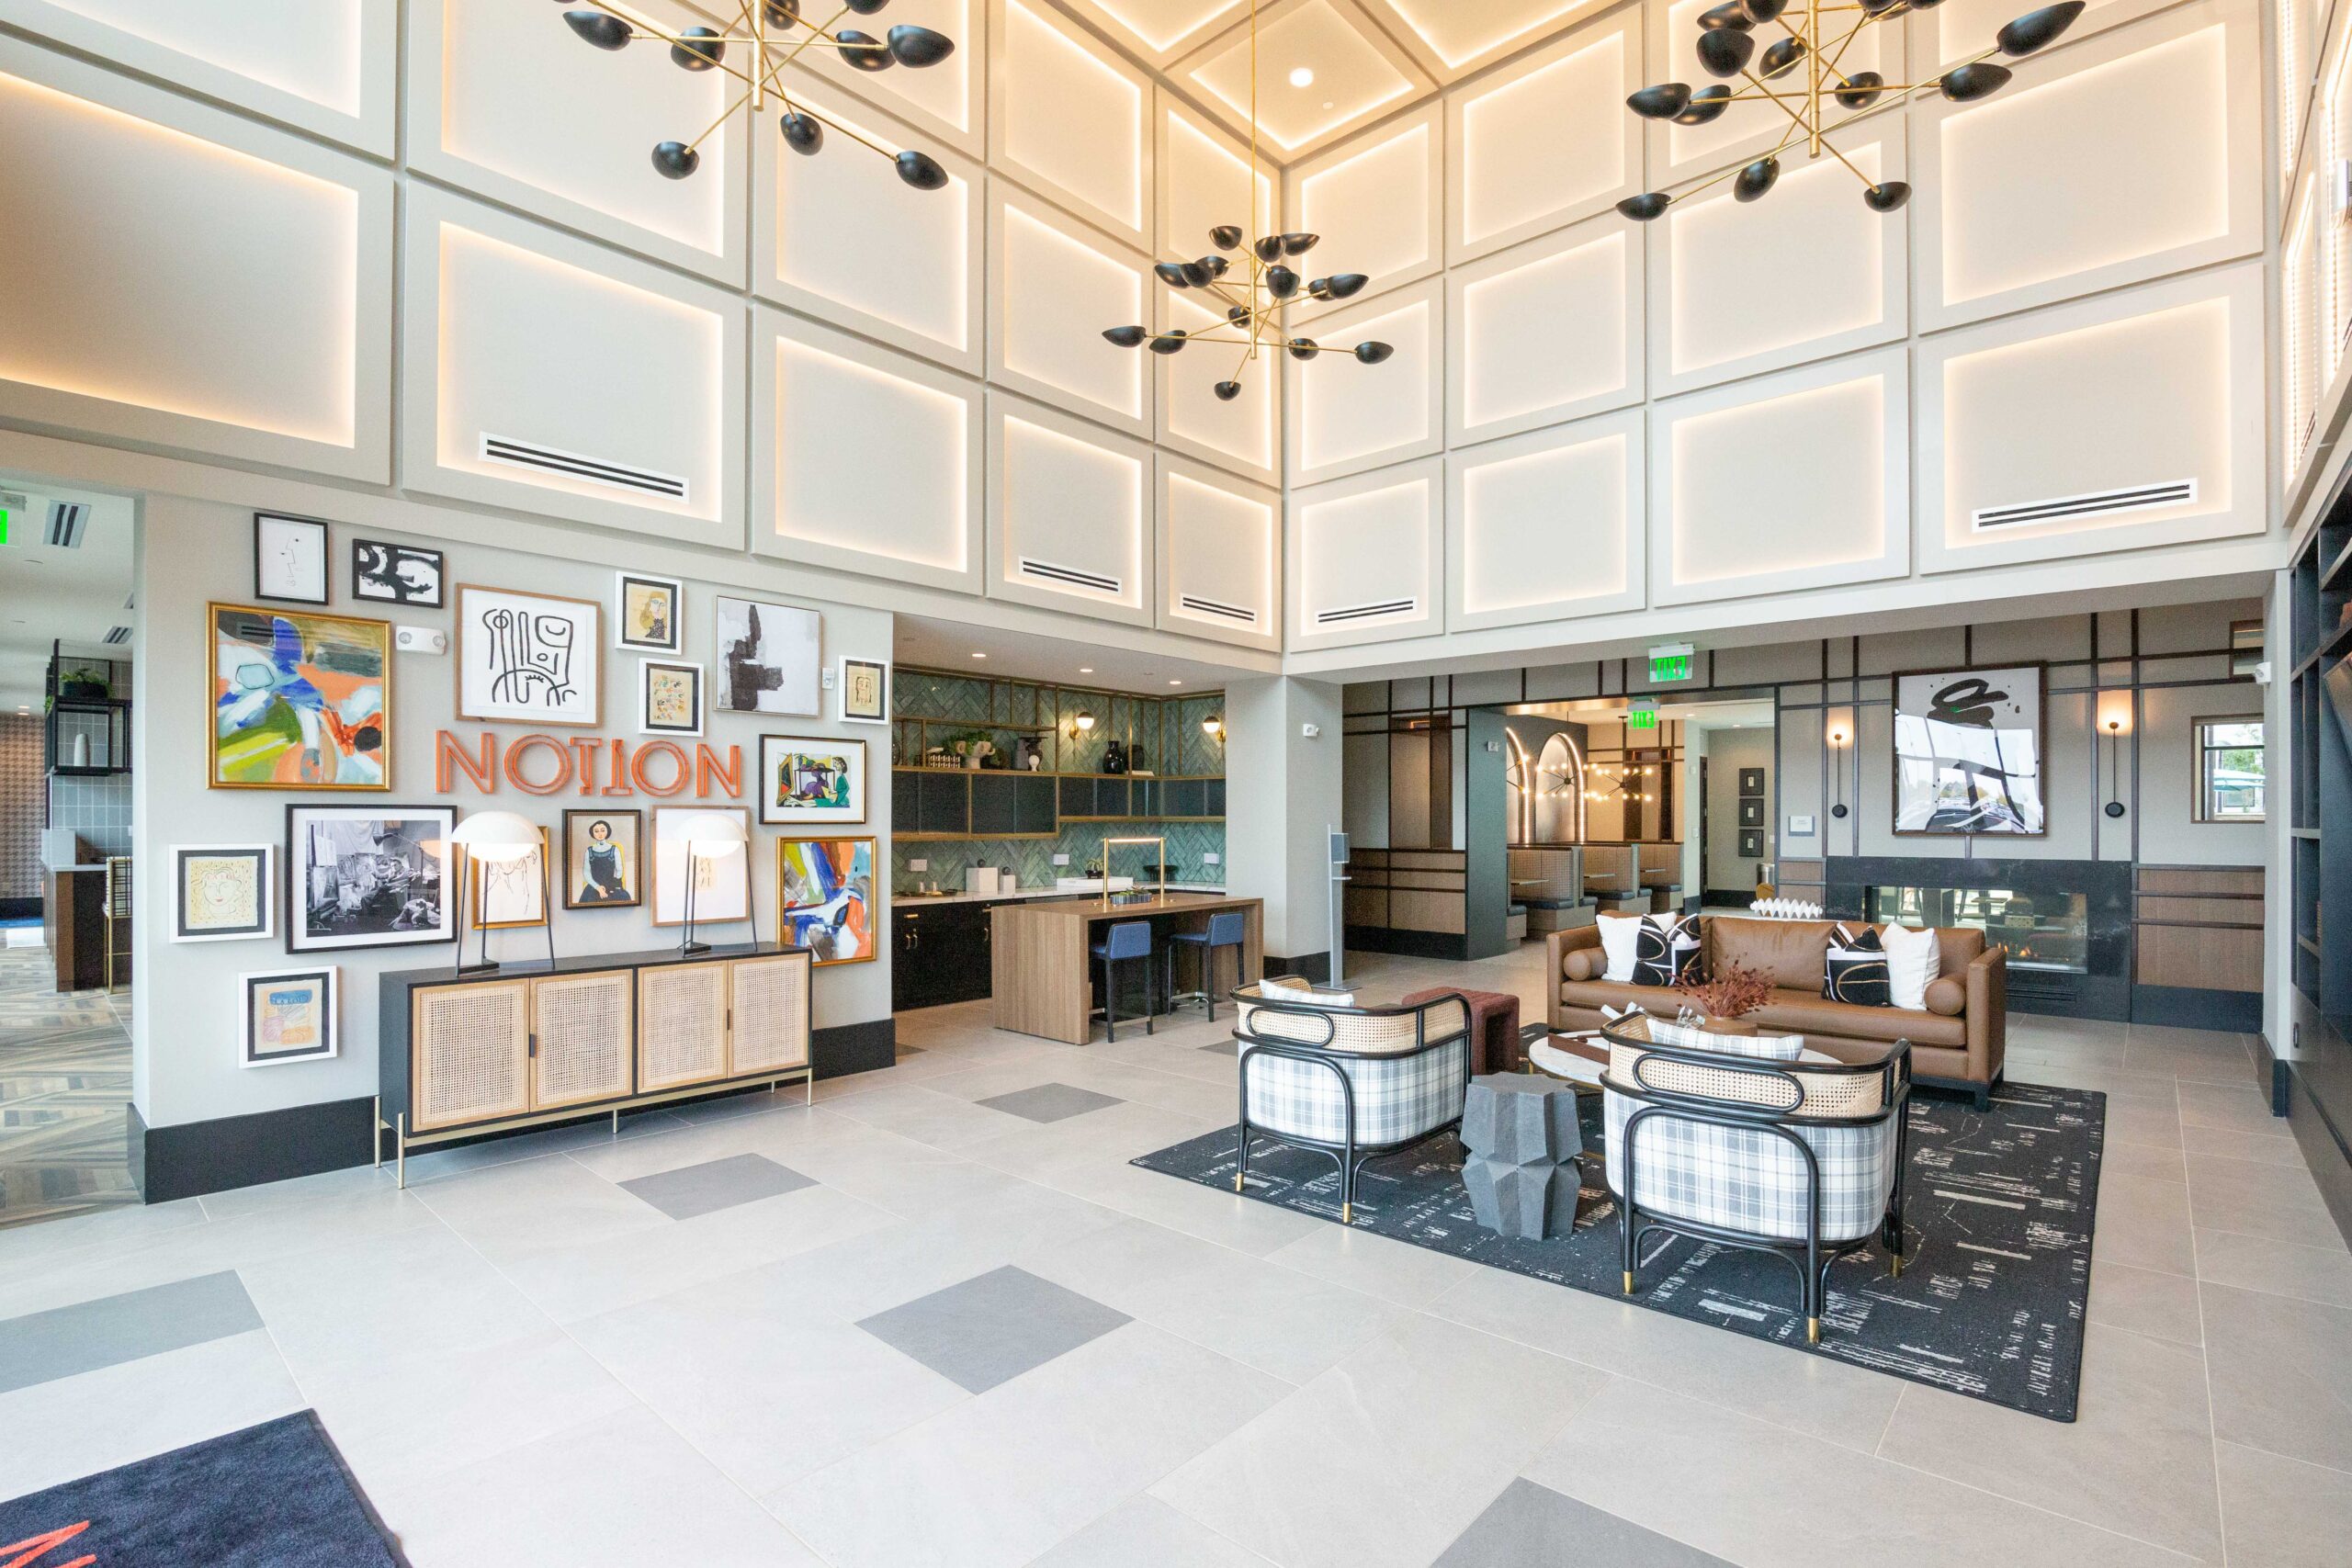 Hospitality lobby & lounge at Notion